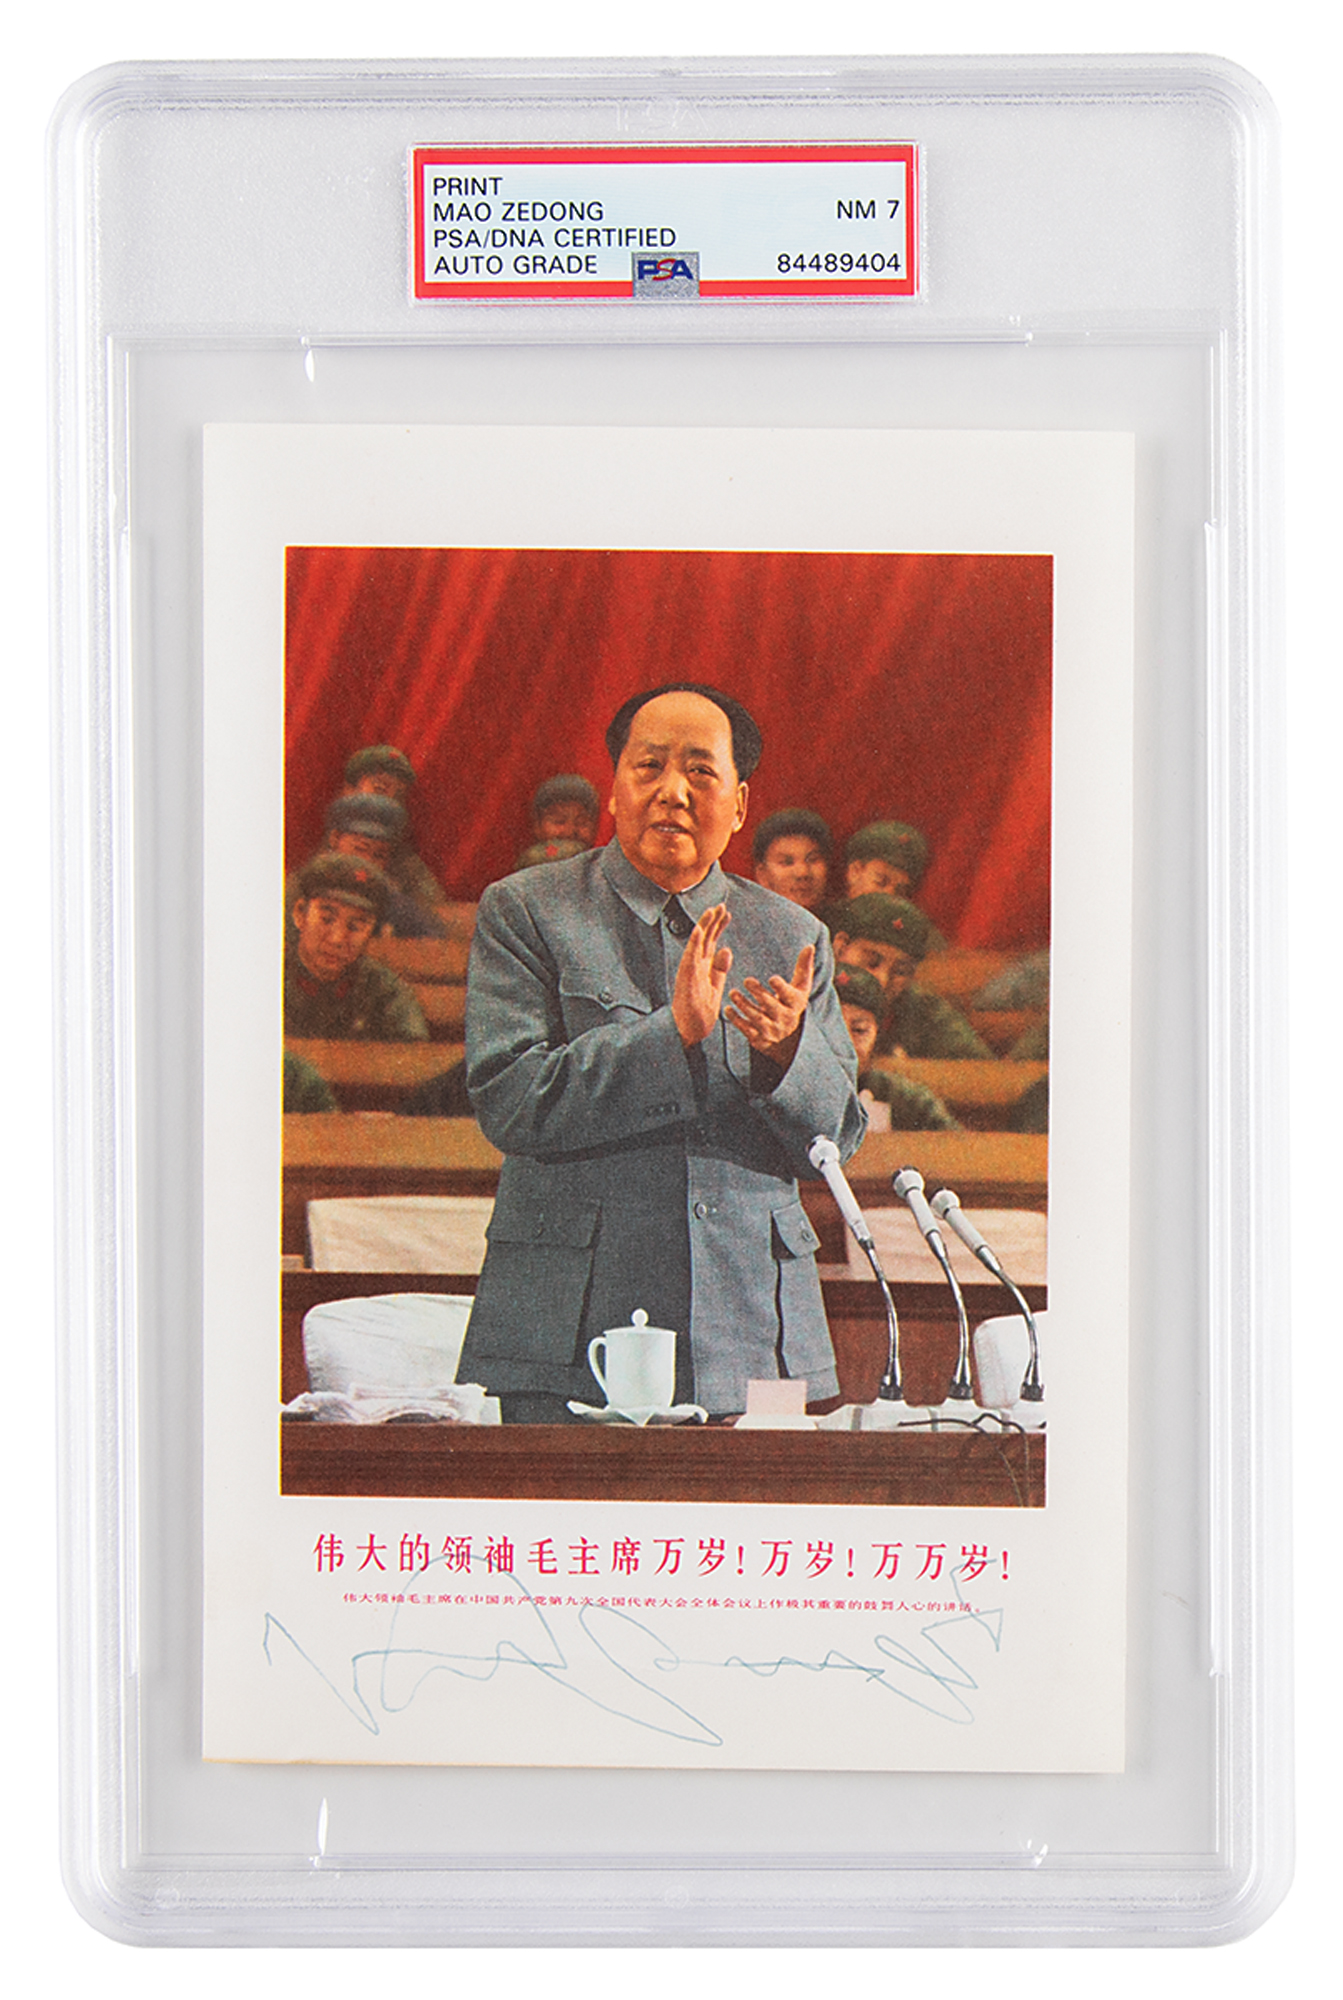 Lot #6134 Mao Zedong Signed Photograph - PSA NM 7